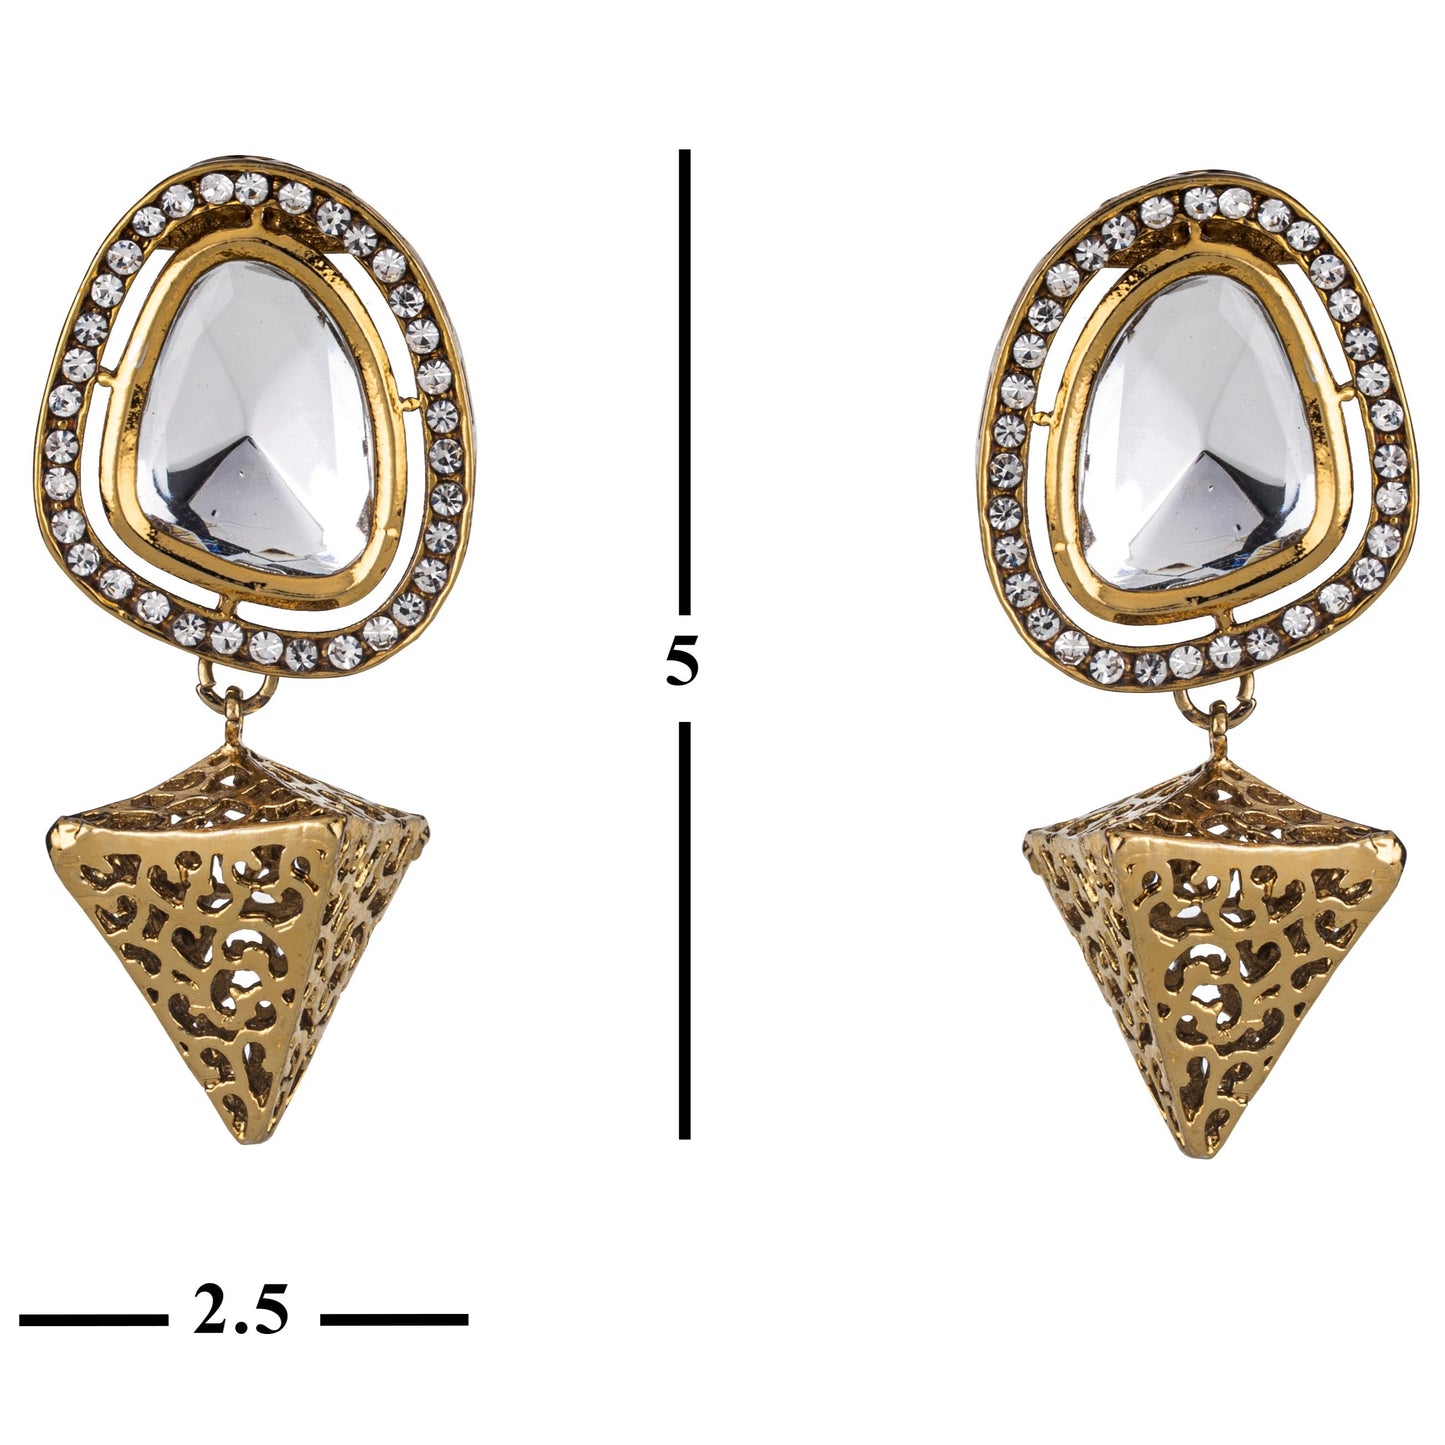 Bdiva 18K Gold Plated Cone Dangler Kundan Earrings with Western Flair.